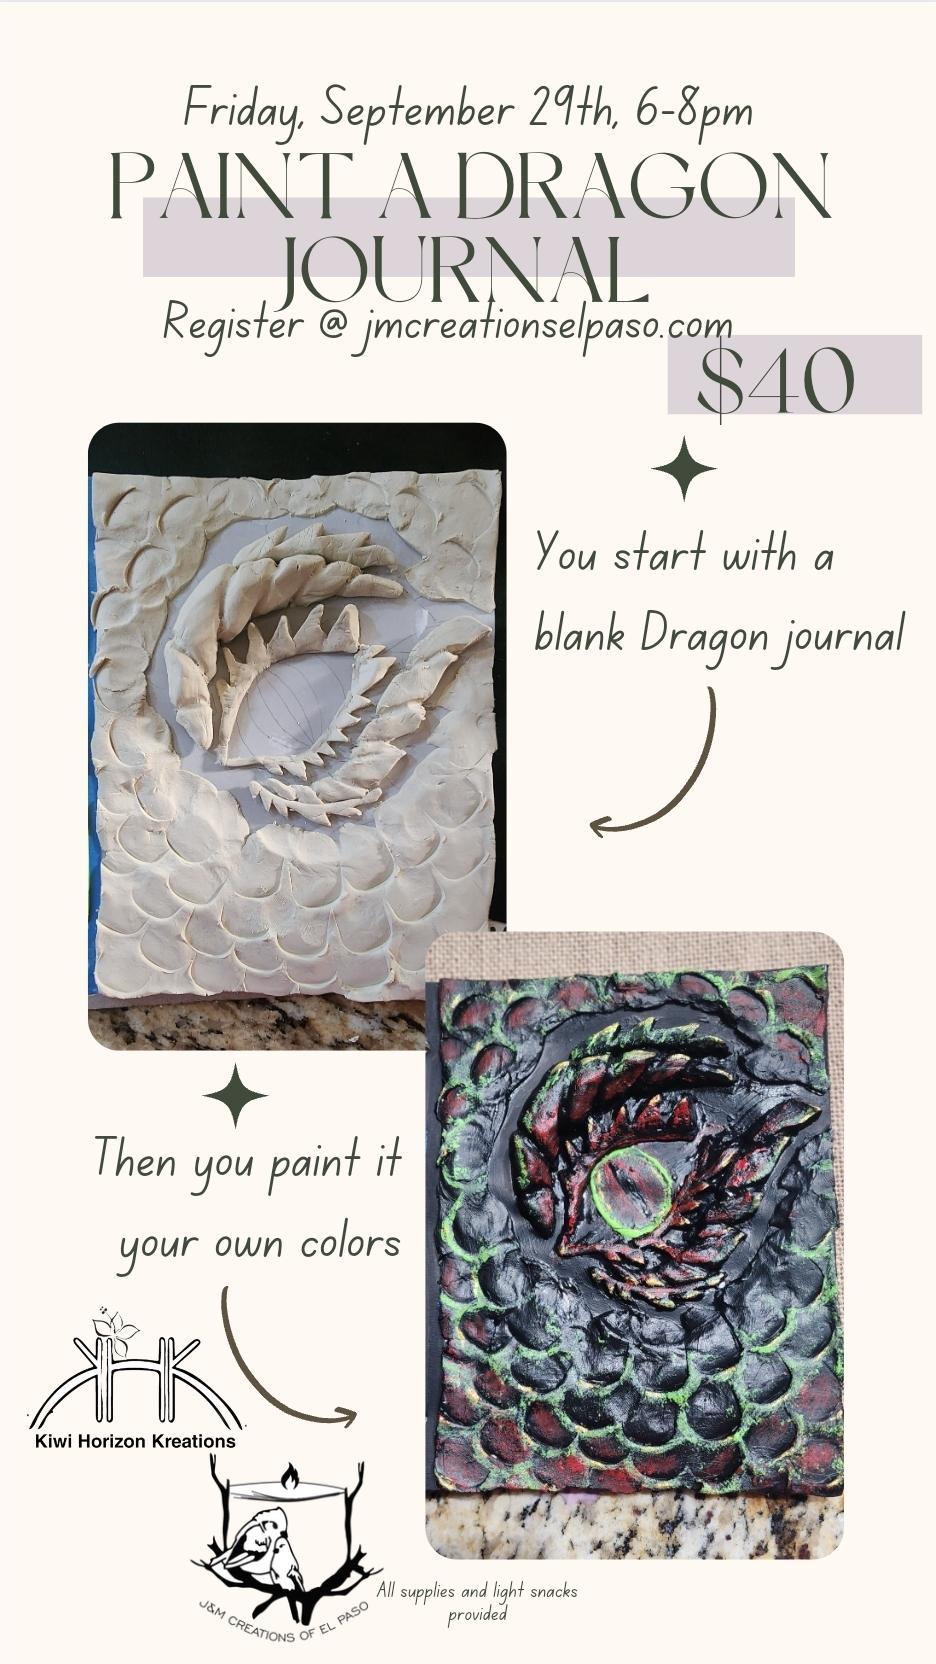 Paint a Dragon Journal Sept 29th